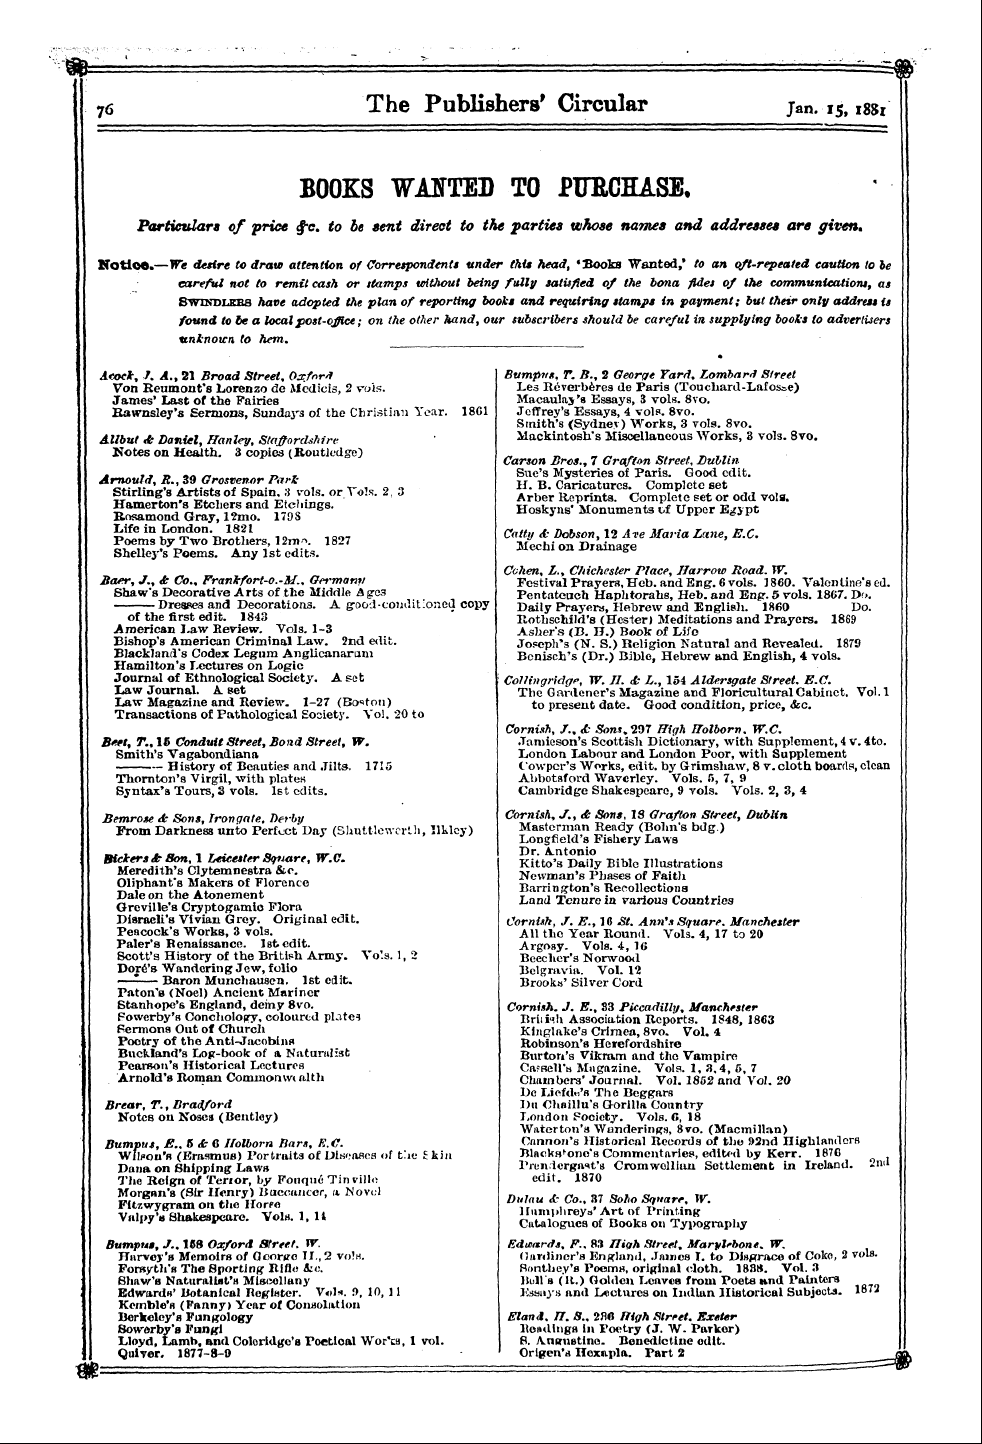 Publishers’ Circular (1880-1890): jS F Y, 1st edition: 76